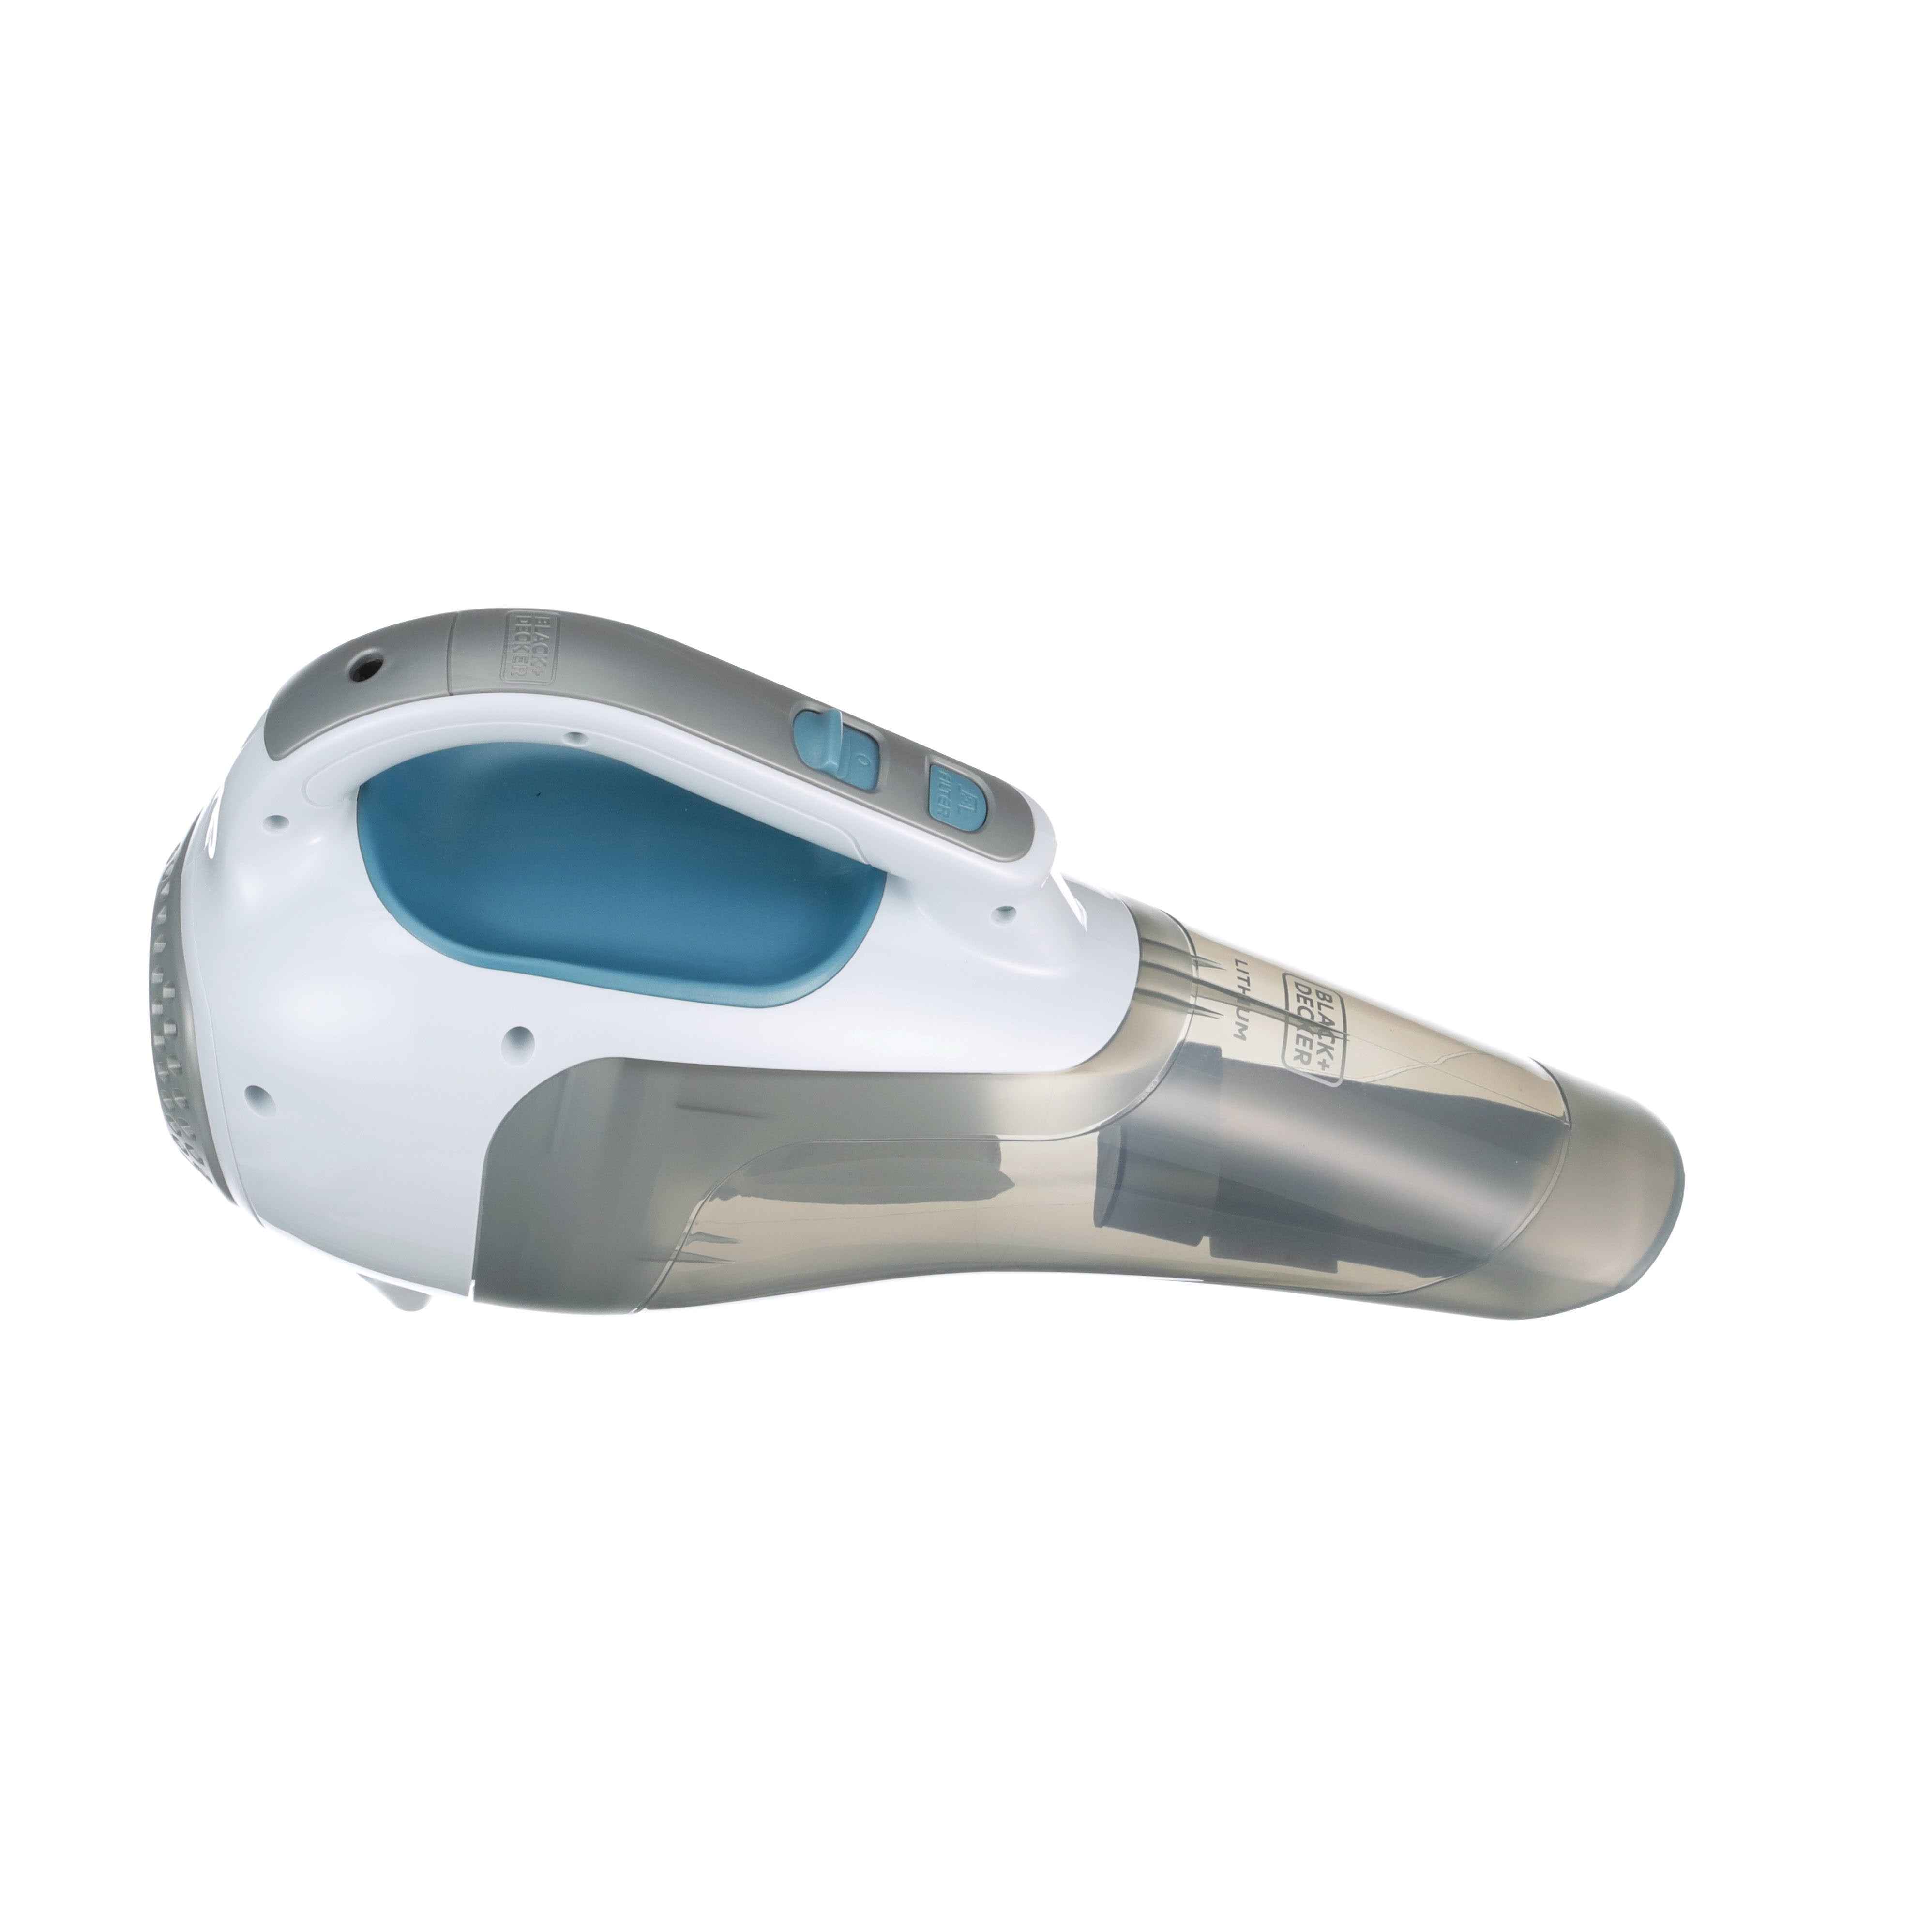  BLACK+DECKER dustbuster Cordless Handheld Vacuum, Flexi Blue/ Grey/White (HHVI315JO42)